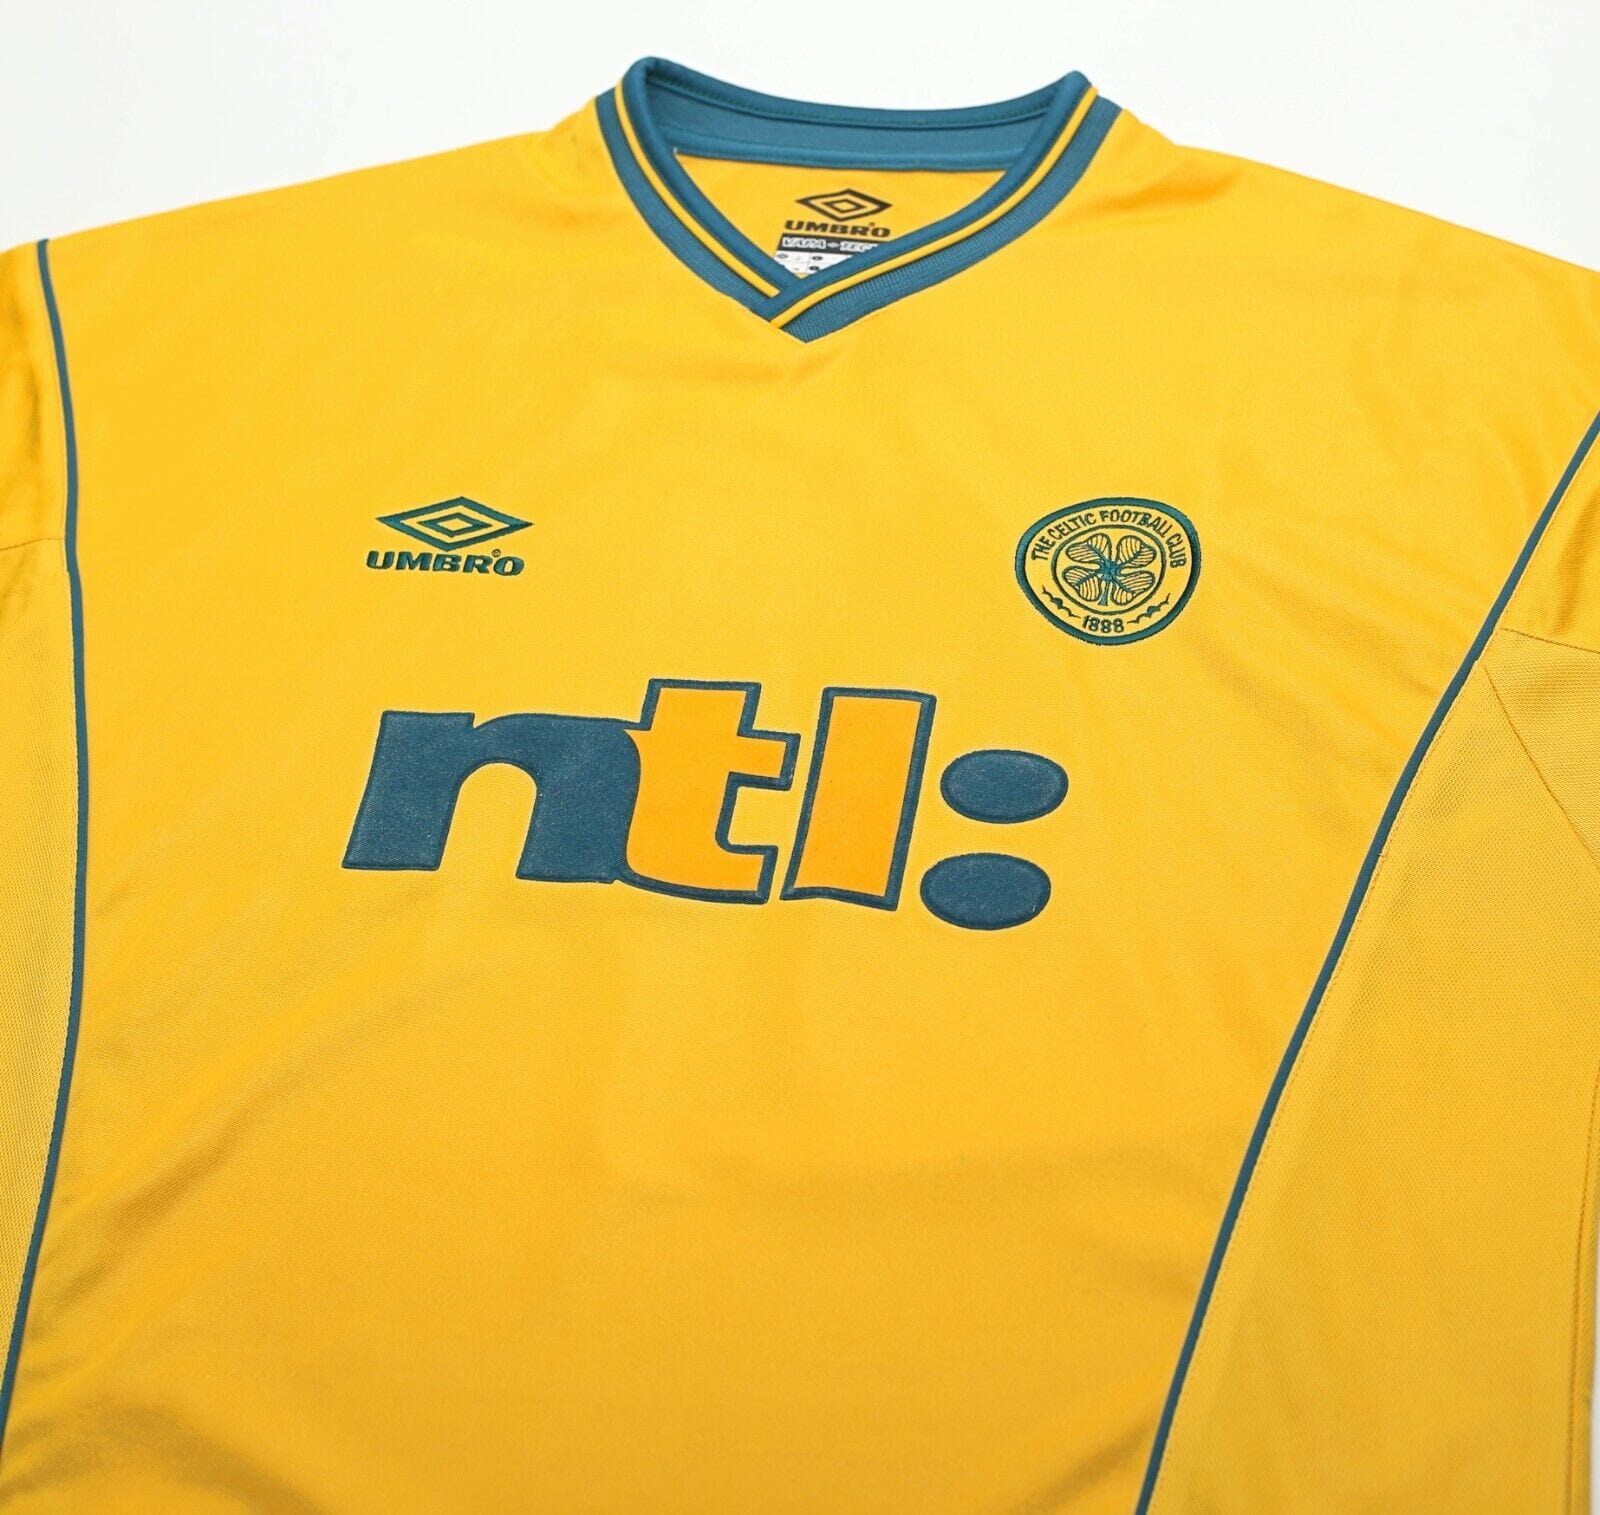 Celtic 2002-03 Away Shirt L/S Larsson #7 (Excellent) M – Classic Football  Kit